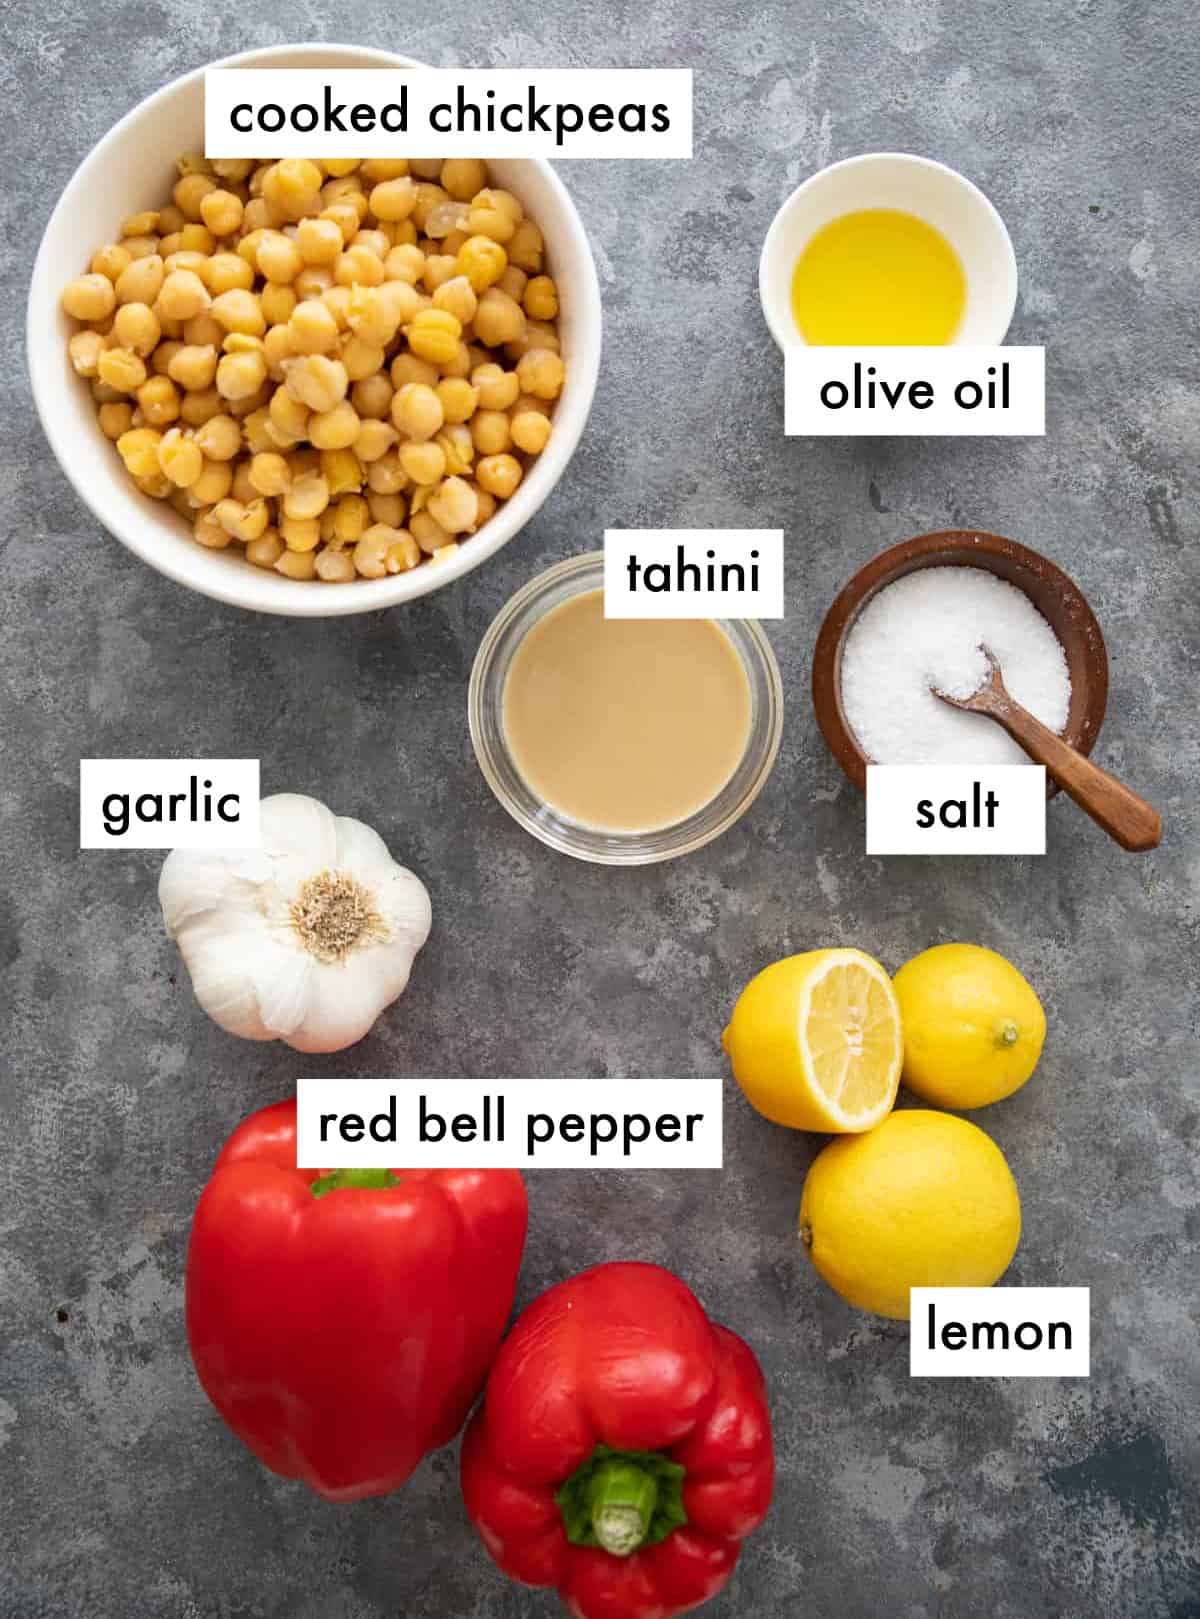 chickpeas, red bell peppers, olive oil, salt, lemon tahini and garlic.